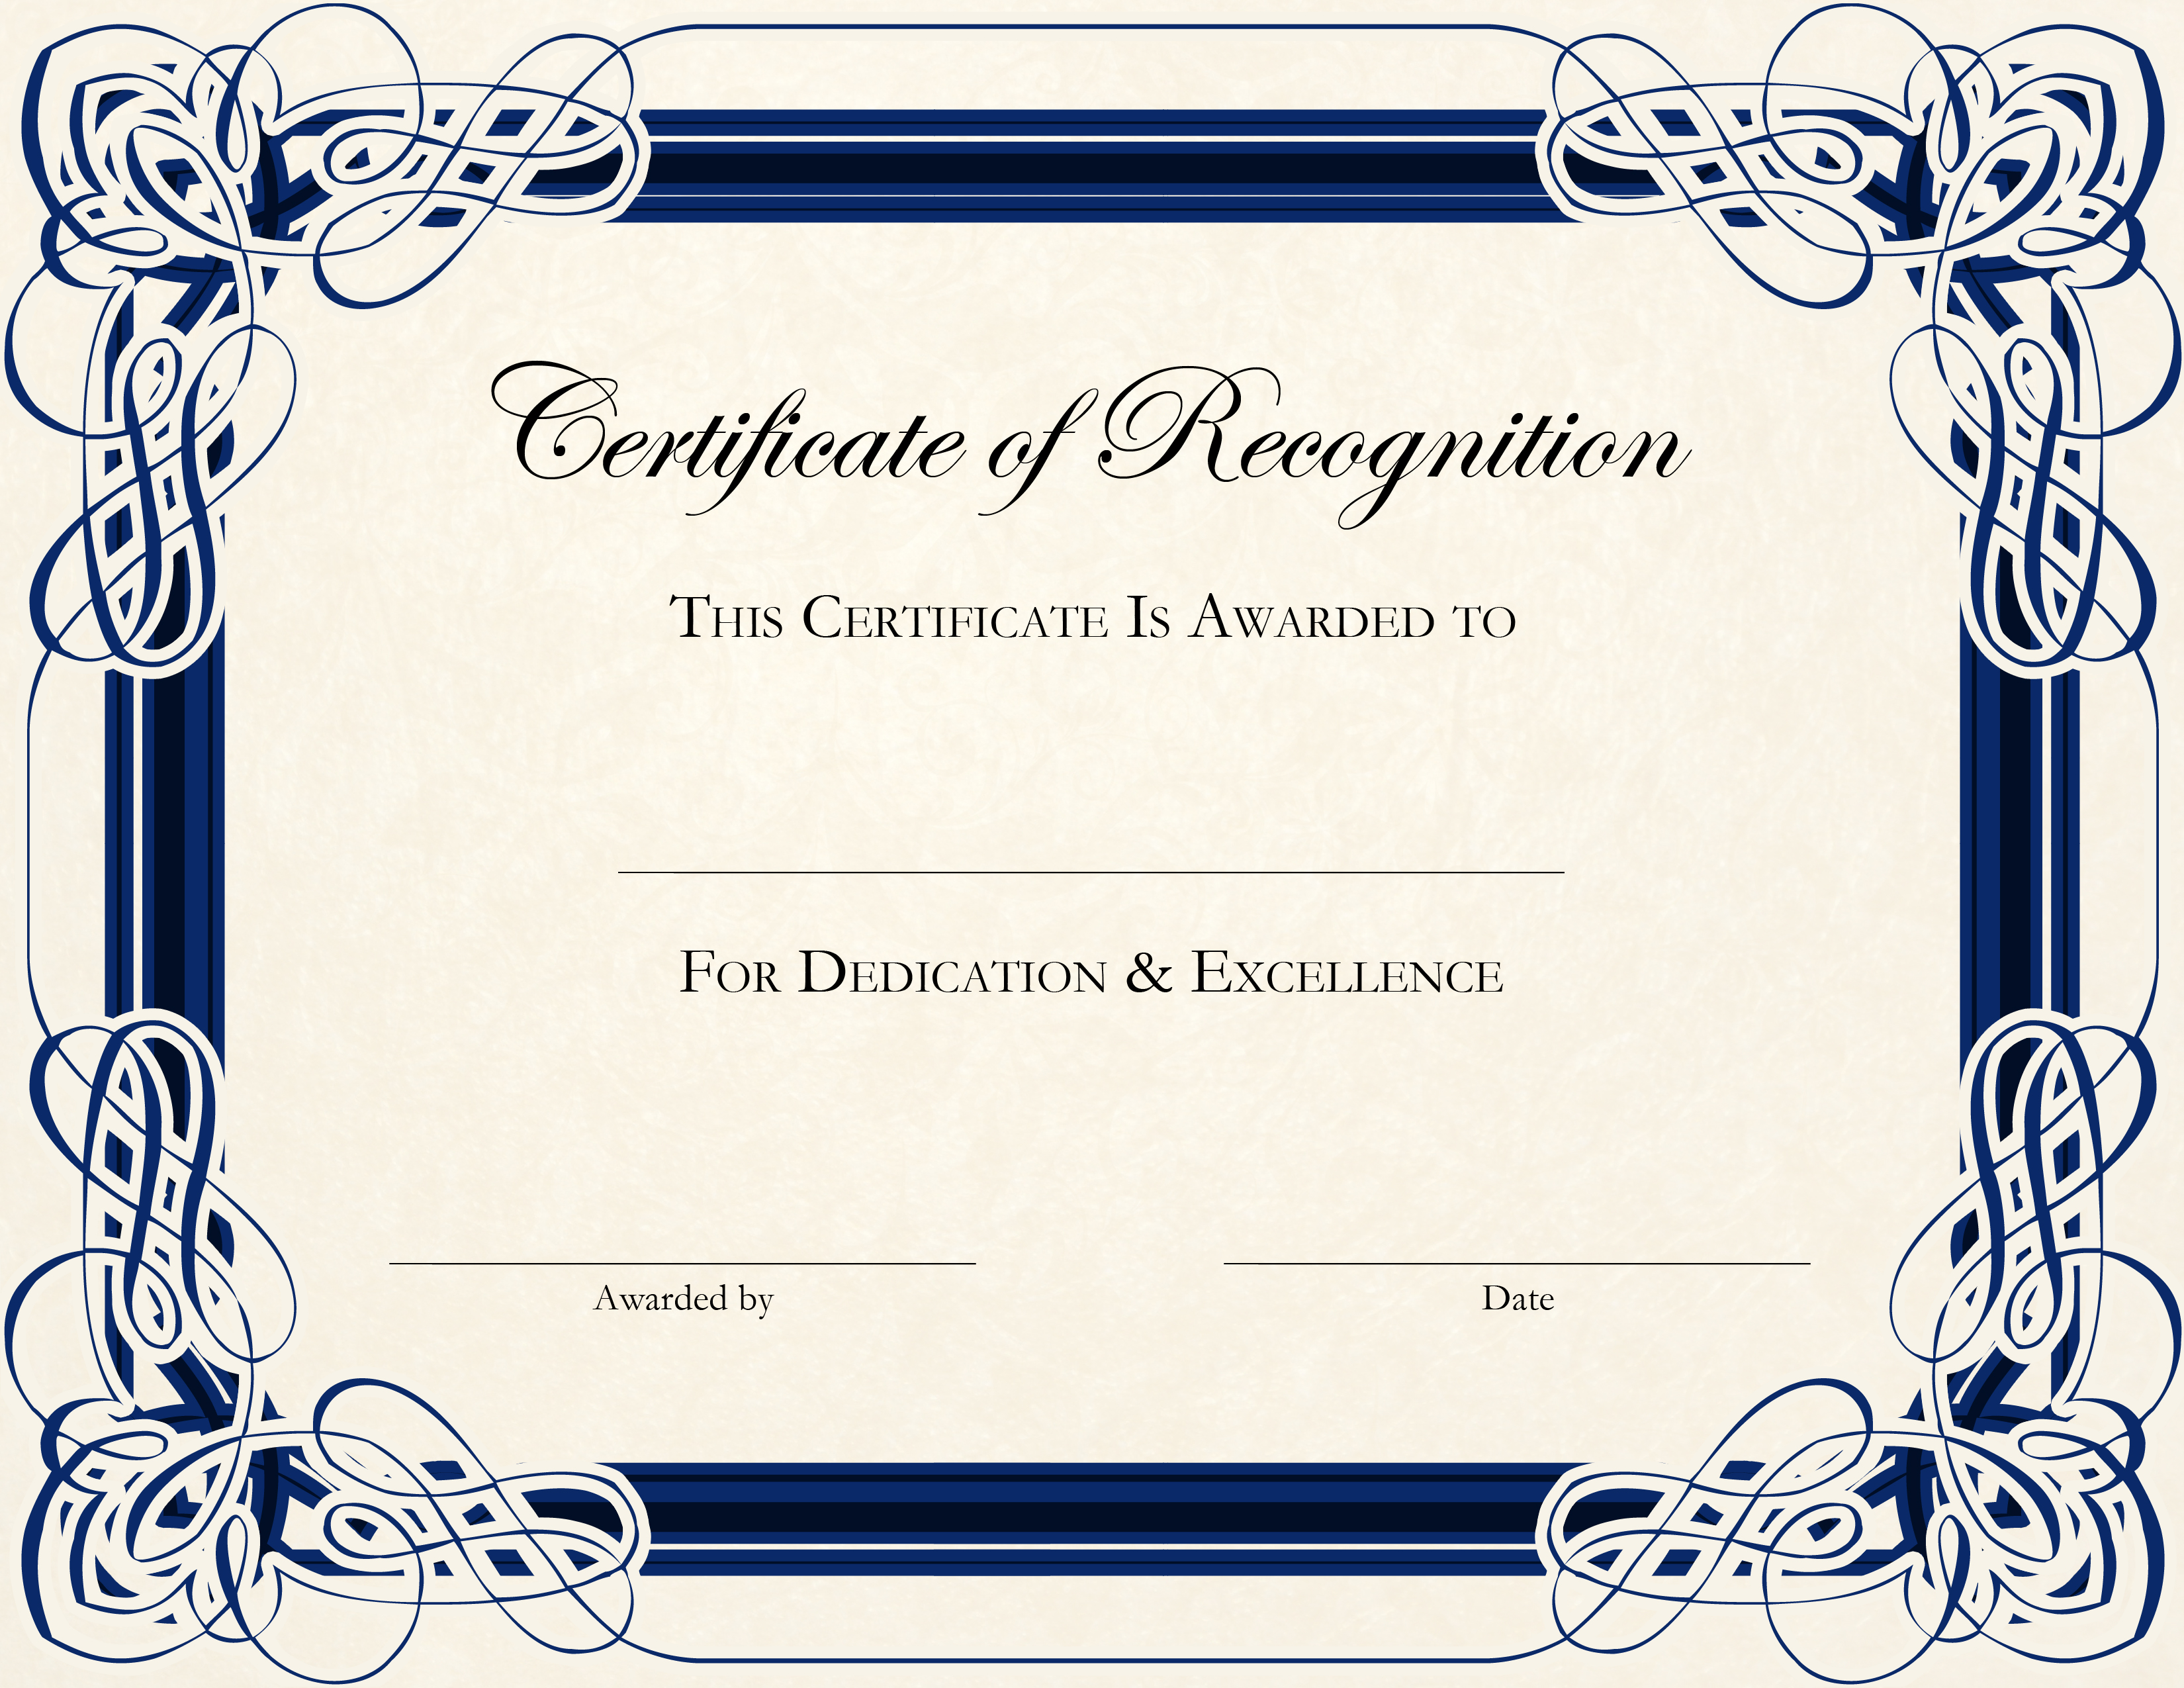 20 Certificate Design Templates Images - Recognition Certificate In Blank Certificate Templates Free Download